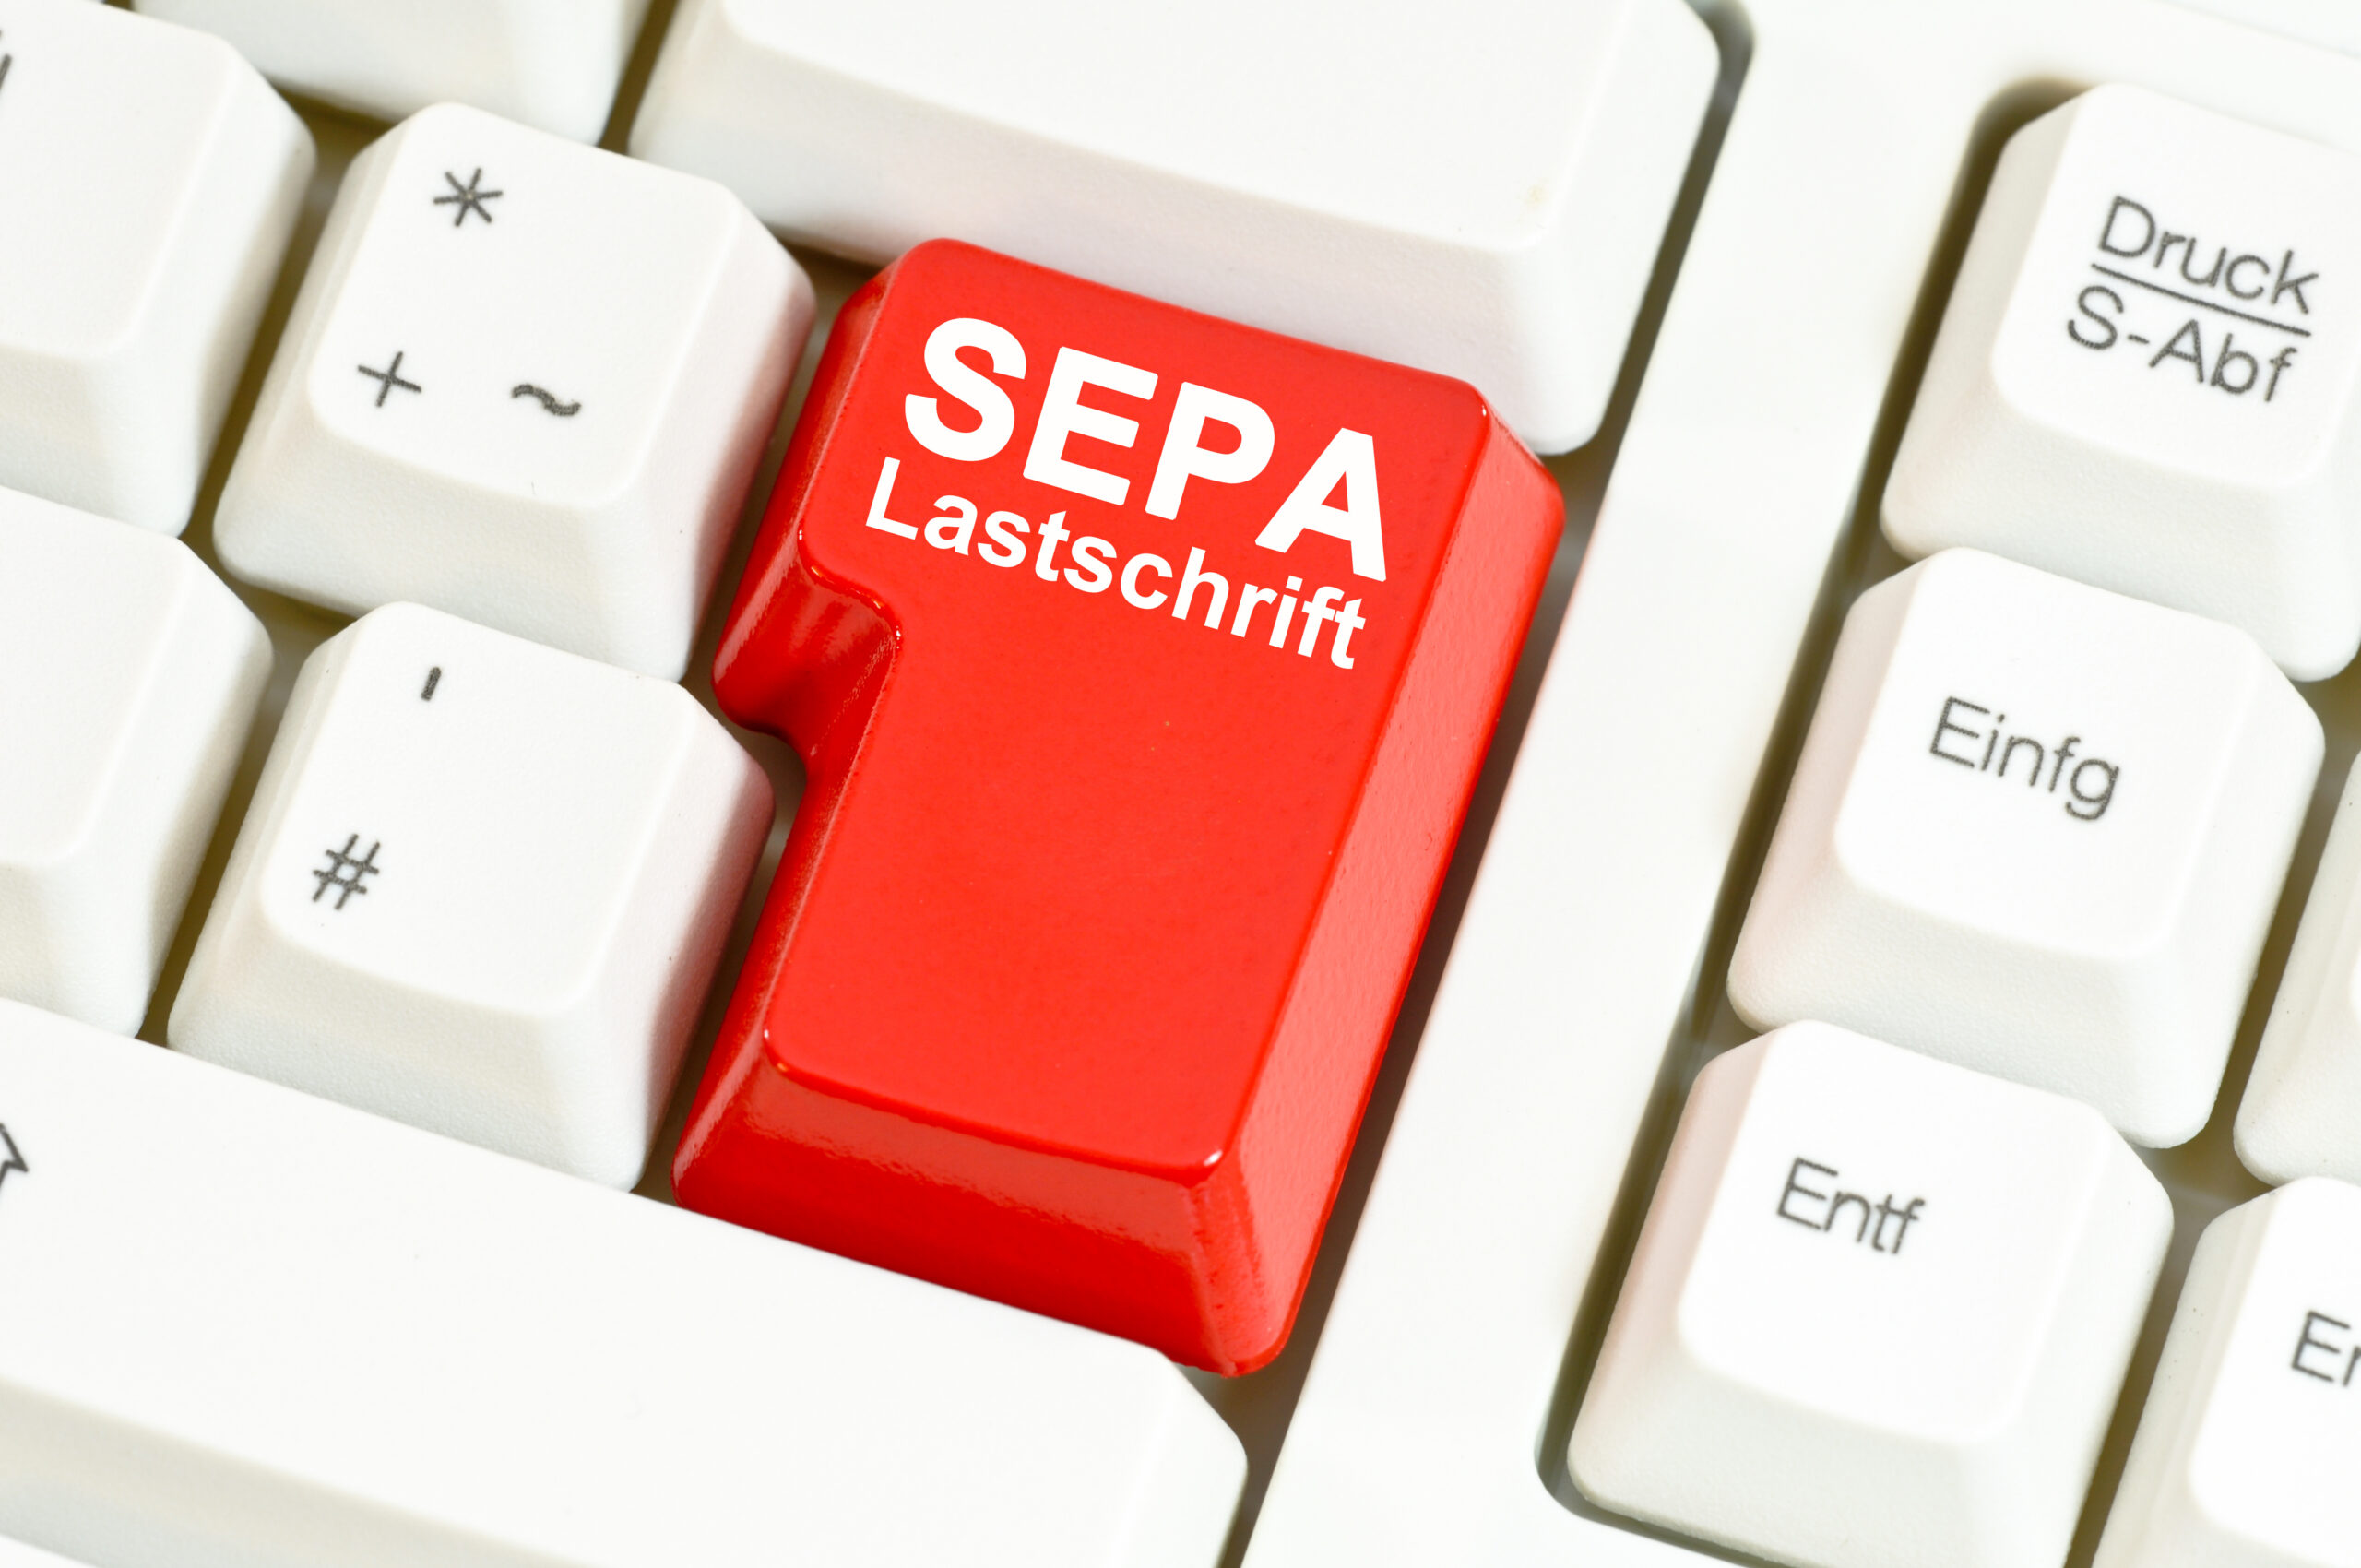 SEPA Lastschrift